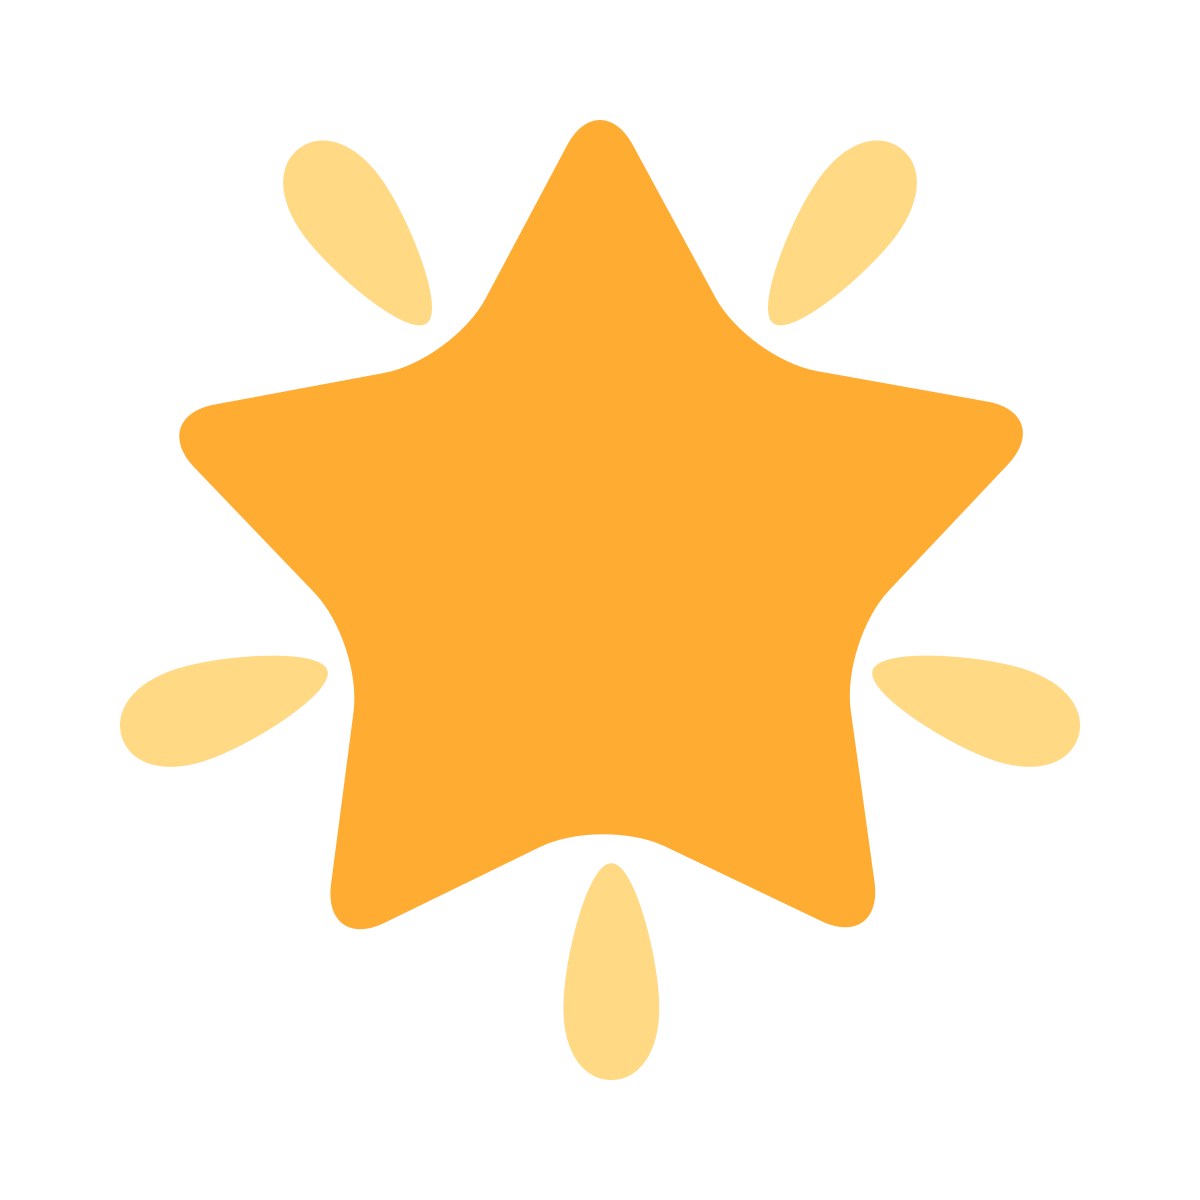 glowing star emoji copy and paste